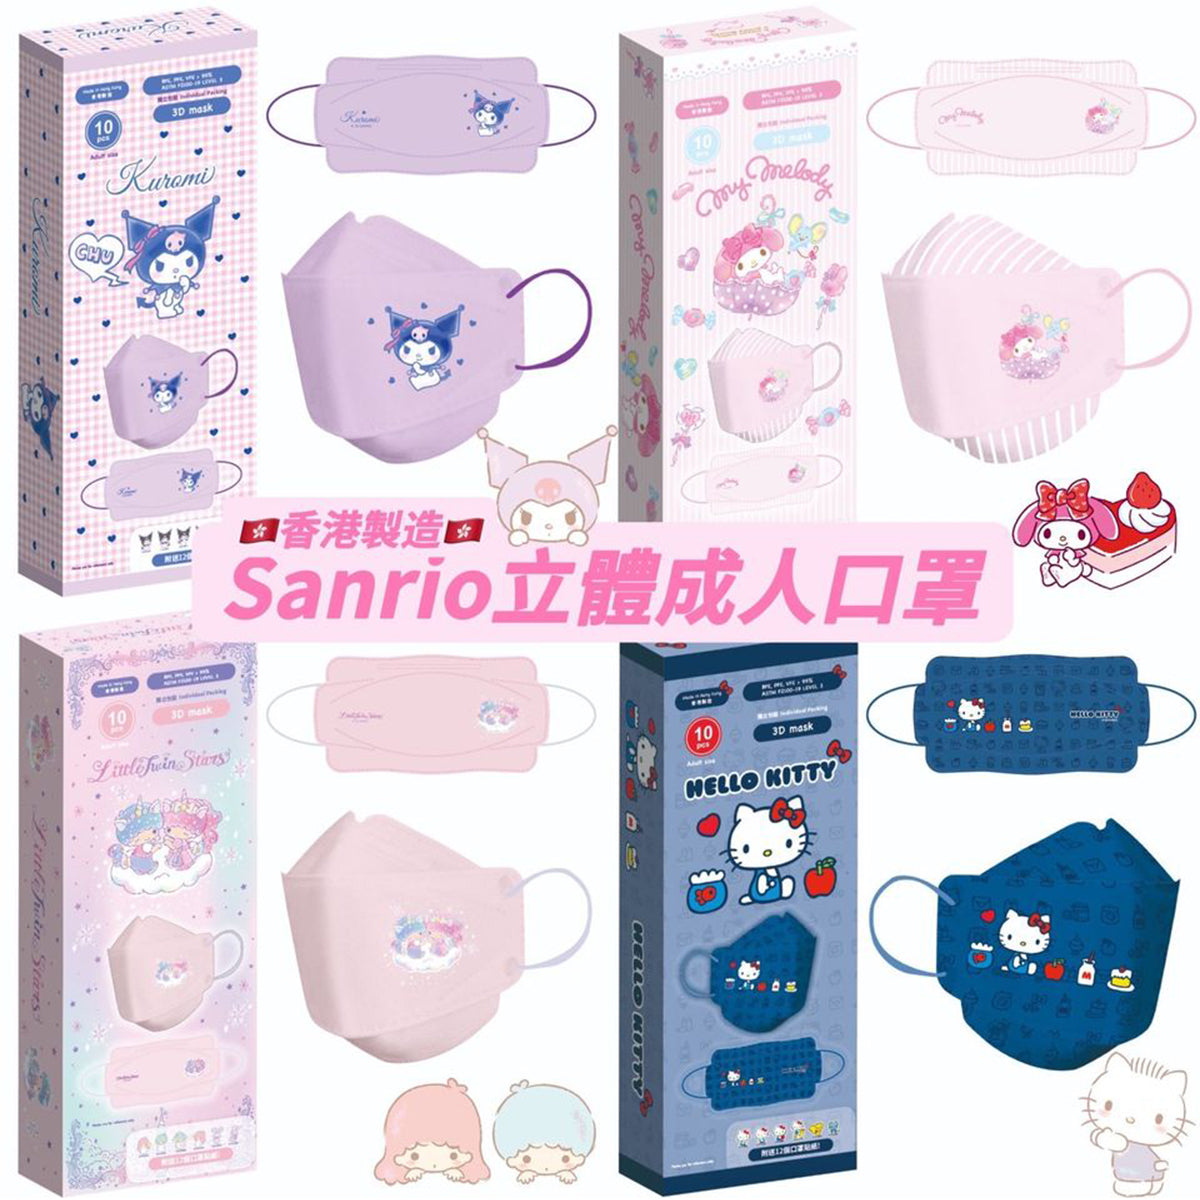 Mask - Sanrio 3D Adult LeveL 3 (10pcs) (Hong Kong Edition)